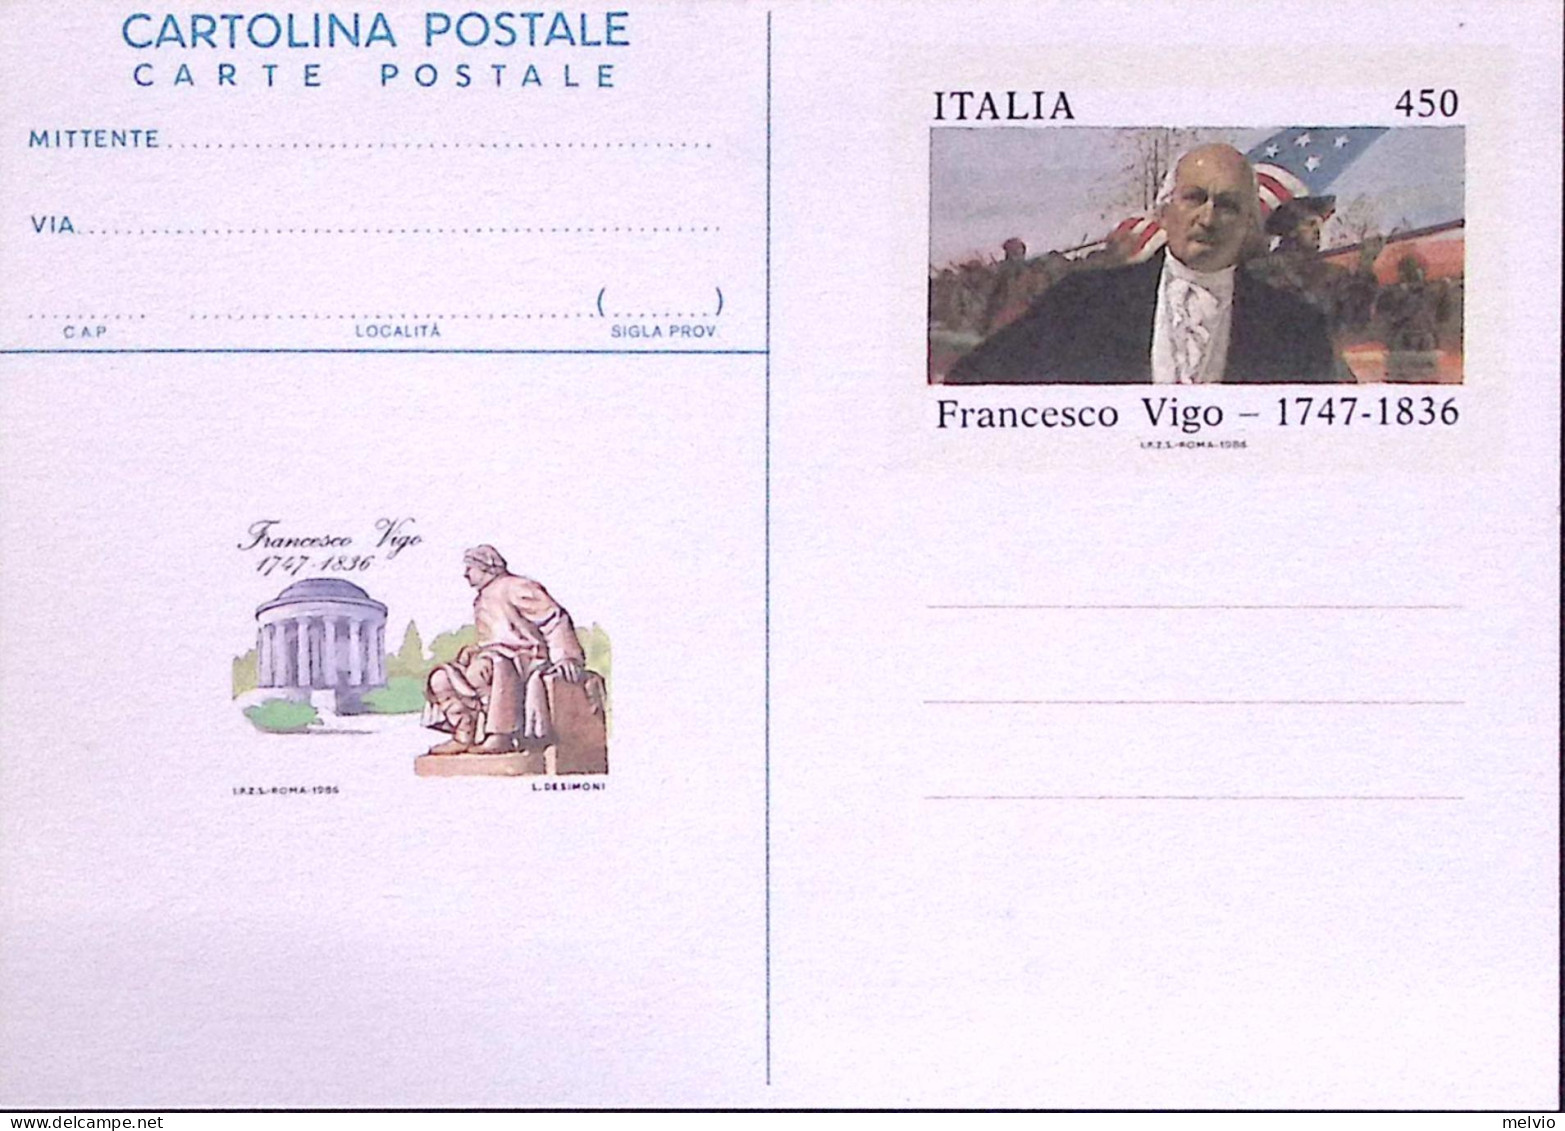 1986-Cartolina Postale Lire 450 Francesco Vigo Nuova - Entiers Postaux